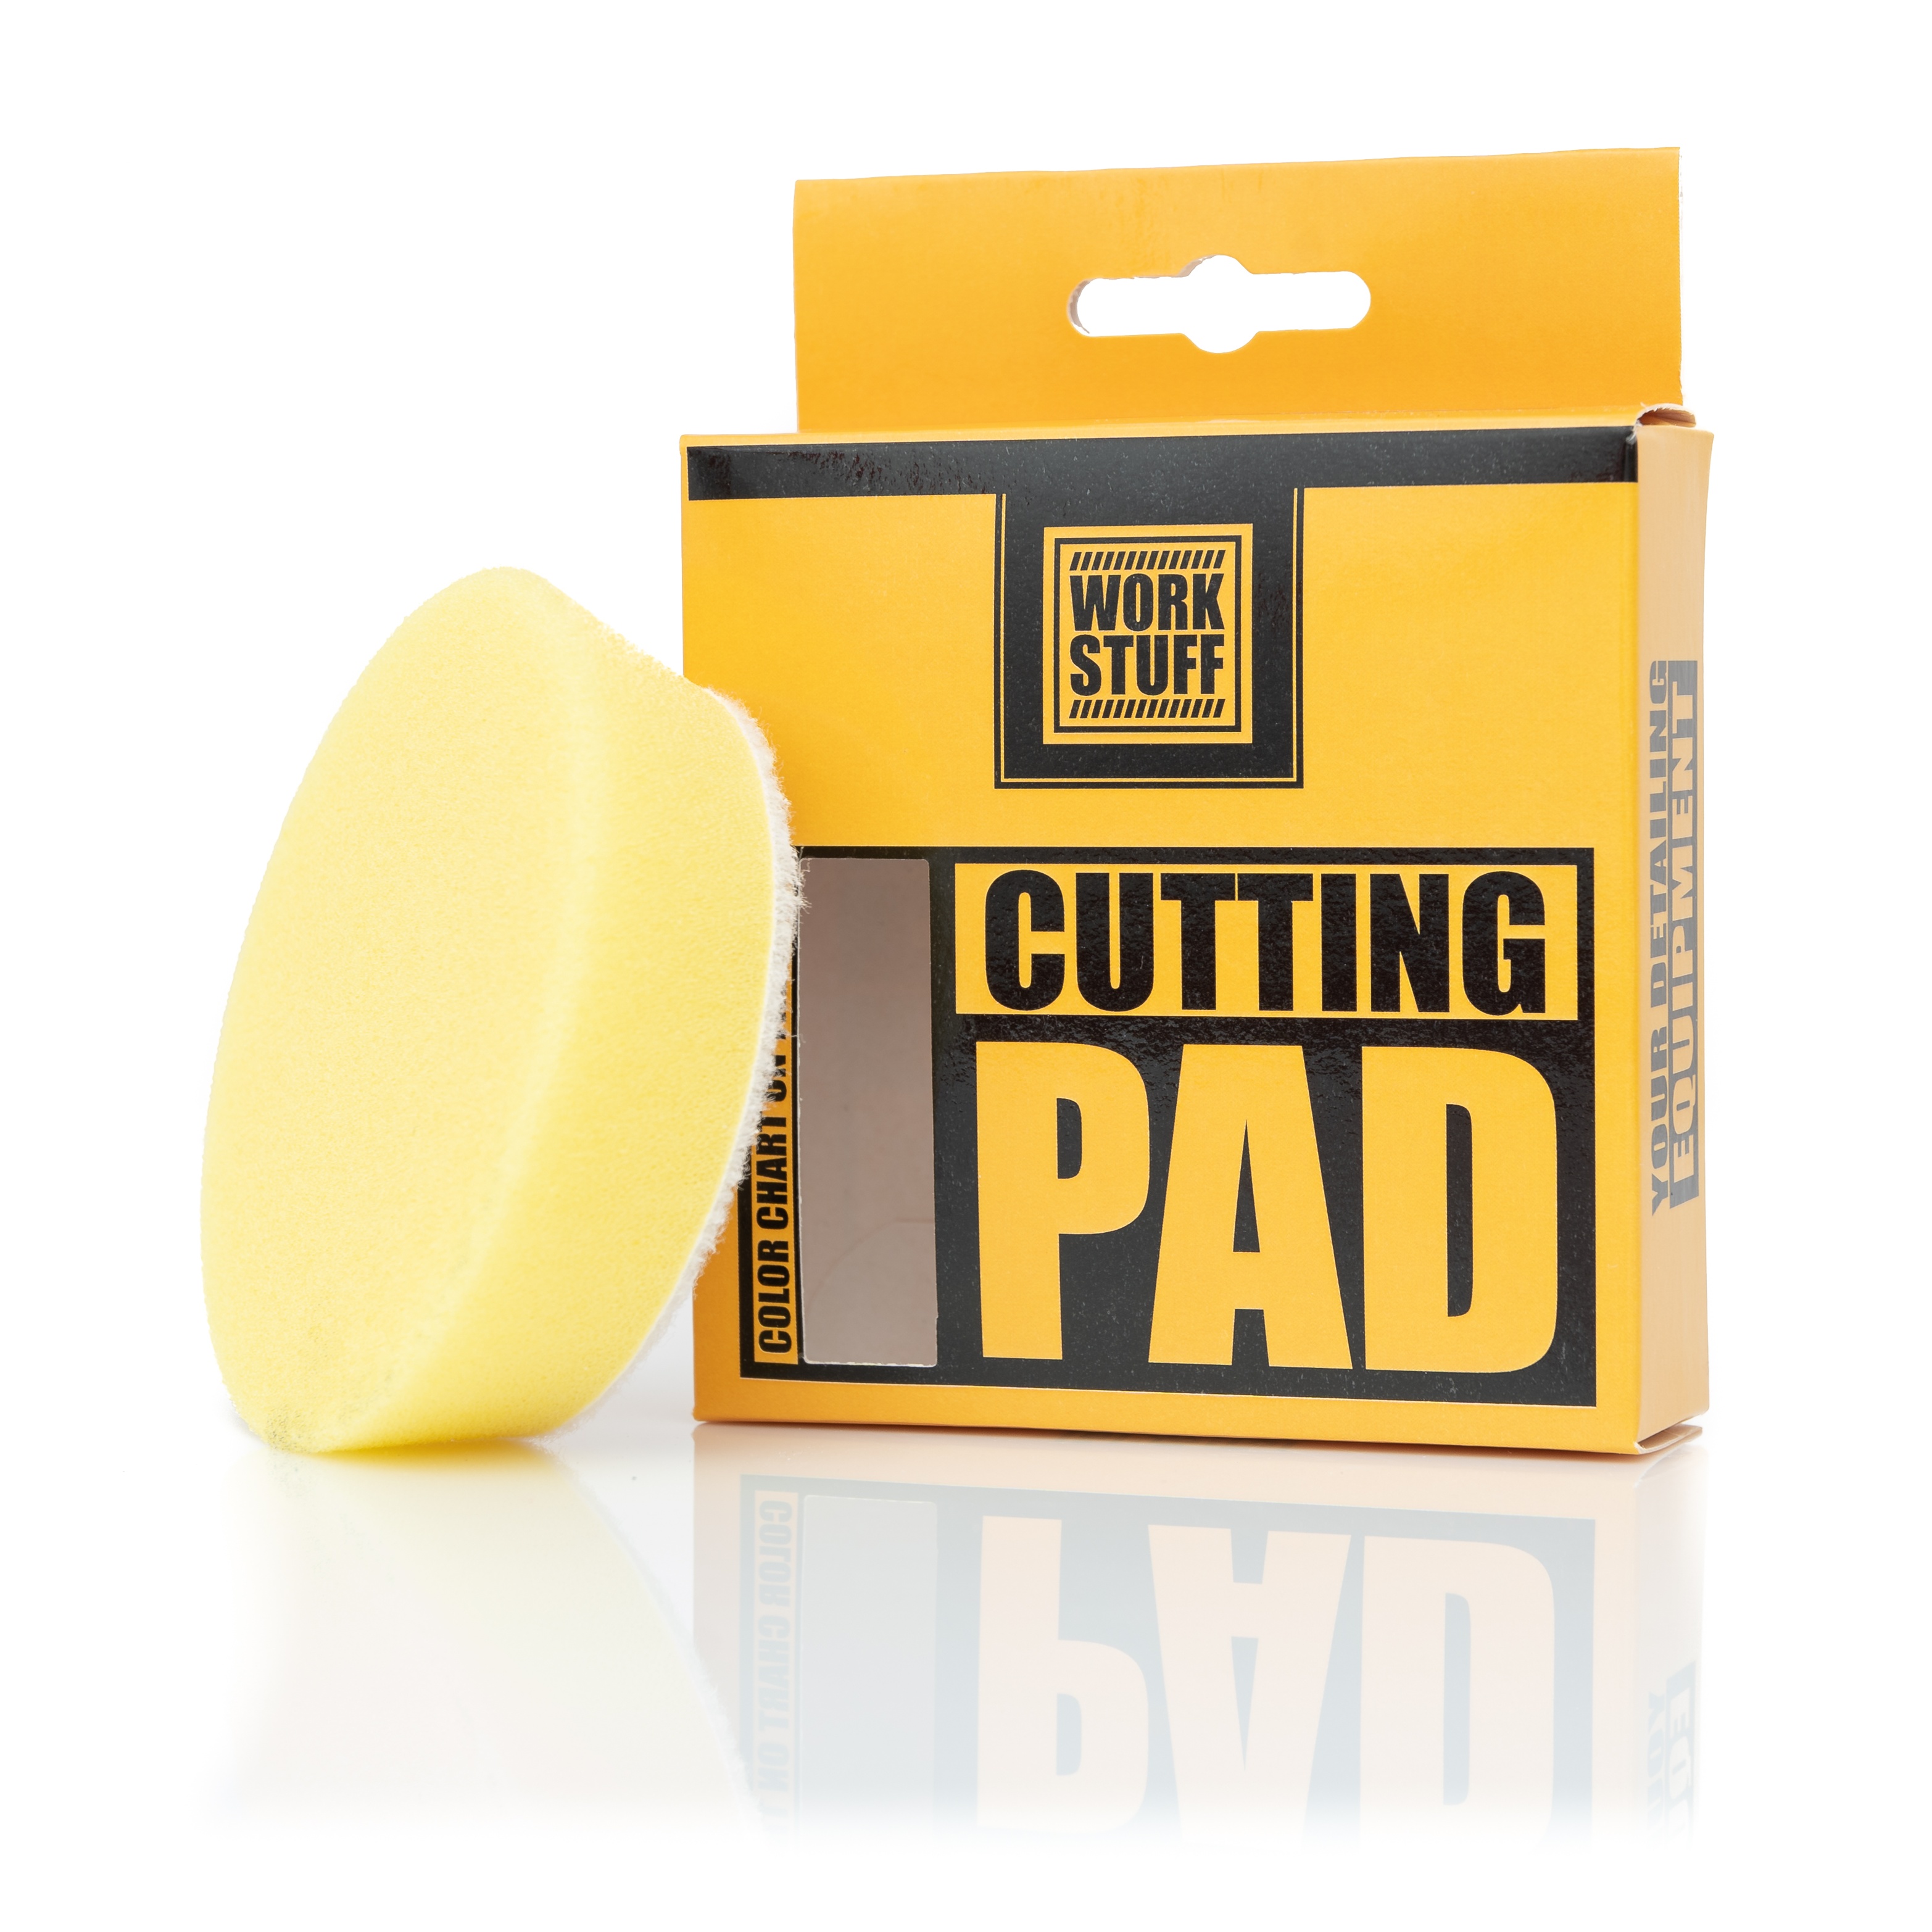 Cutting PAD - High-Performance Abrasive Polishing Pad.